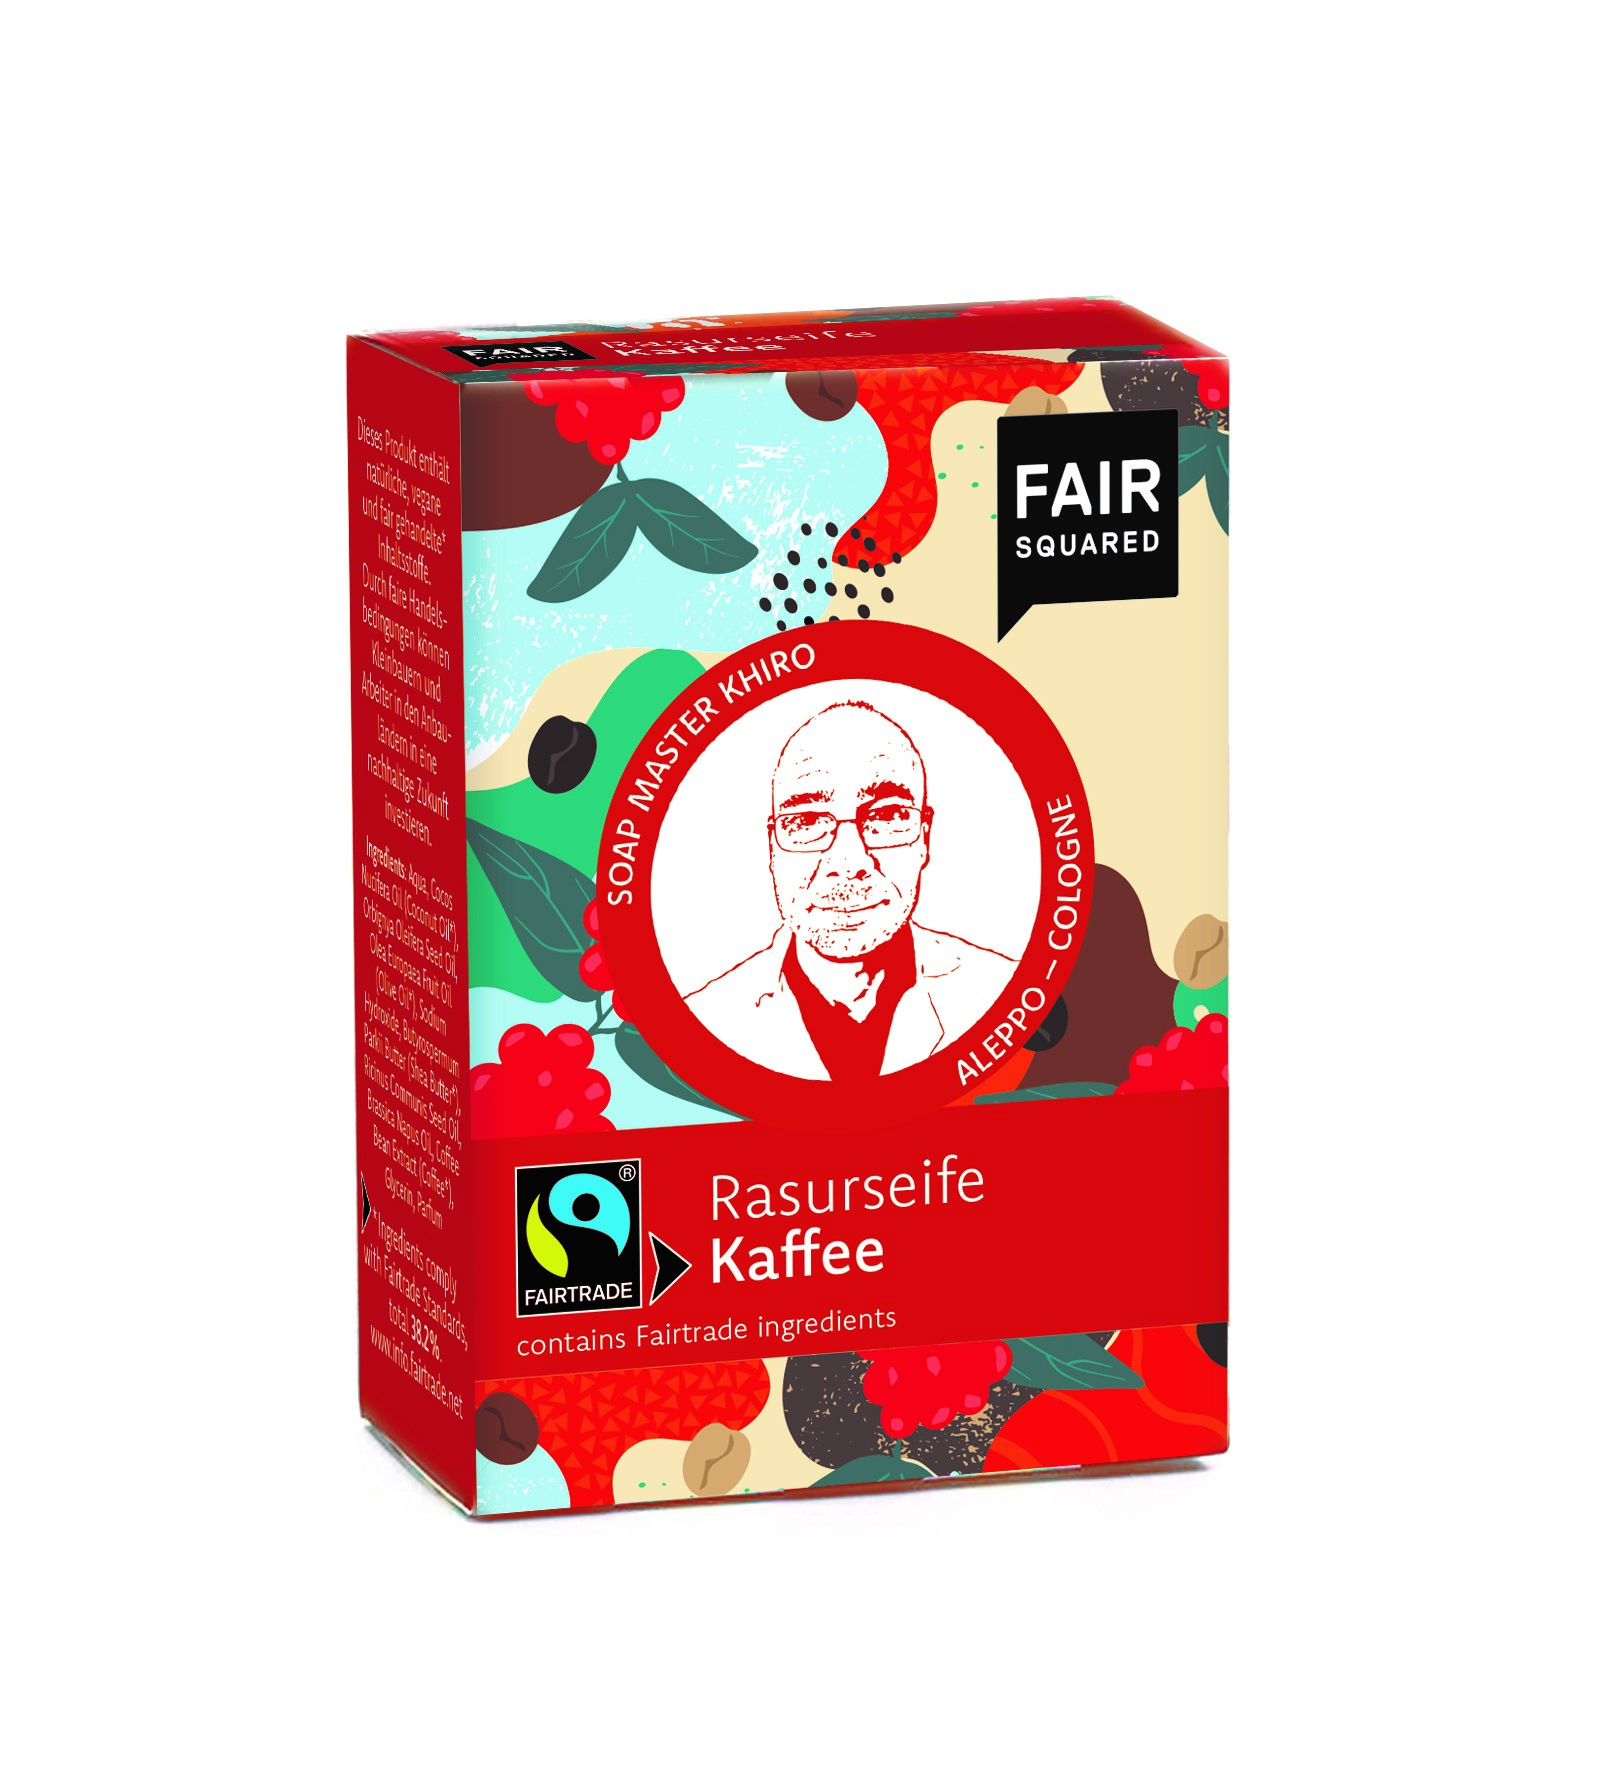 FAIR SQUARED Fairtrade Jubiläum Rasurseife Kaffee 80 gr.